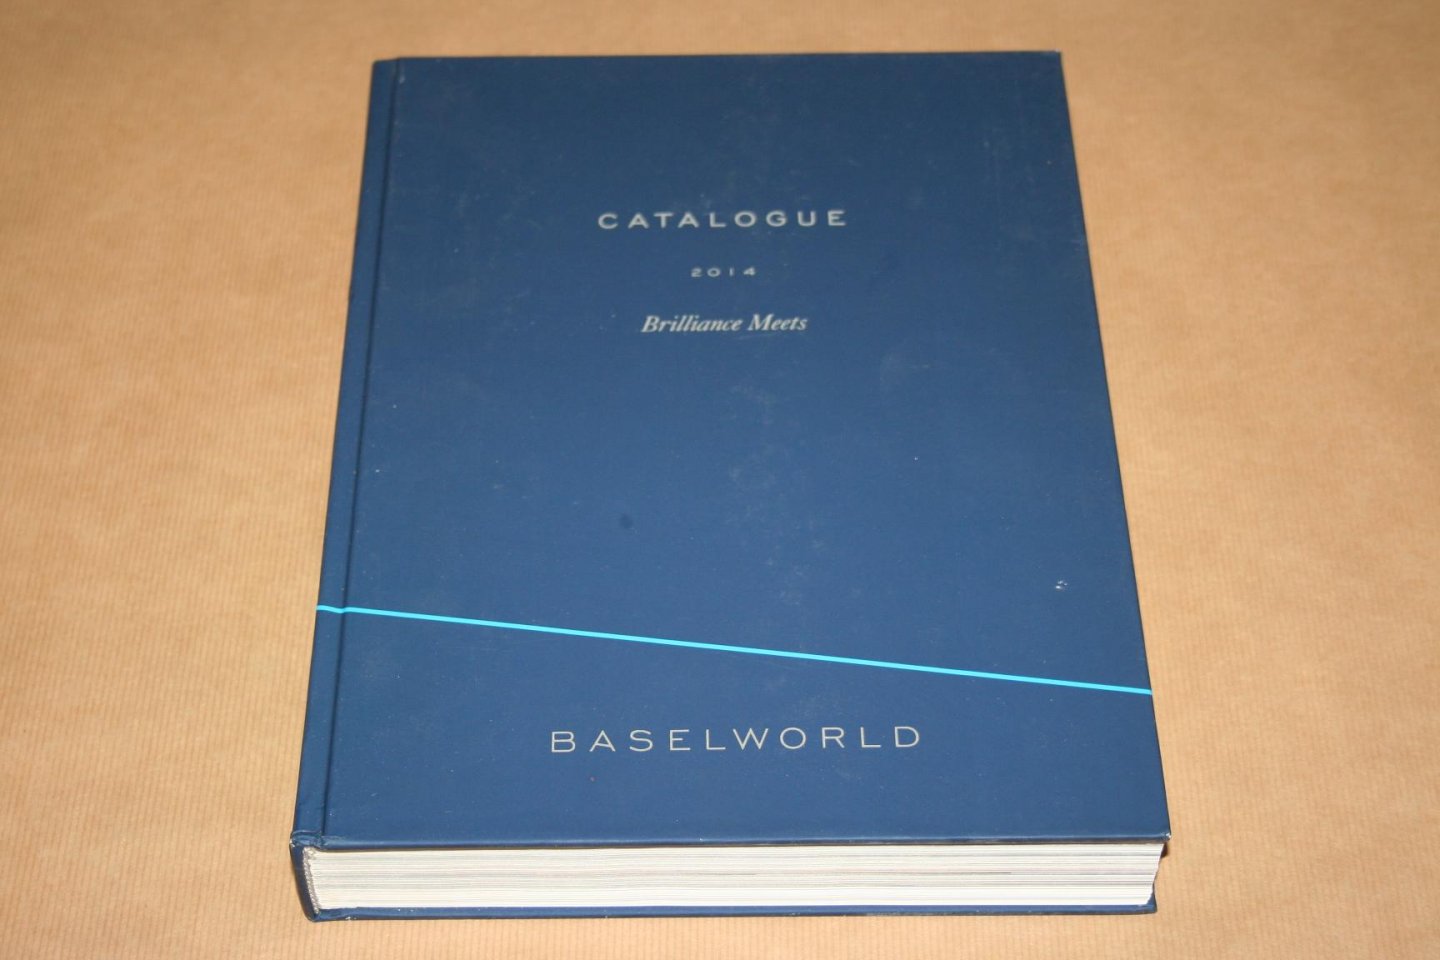  - Baselworld Catalogue 2014  -  Brilliance Meets